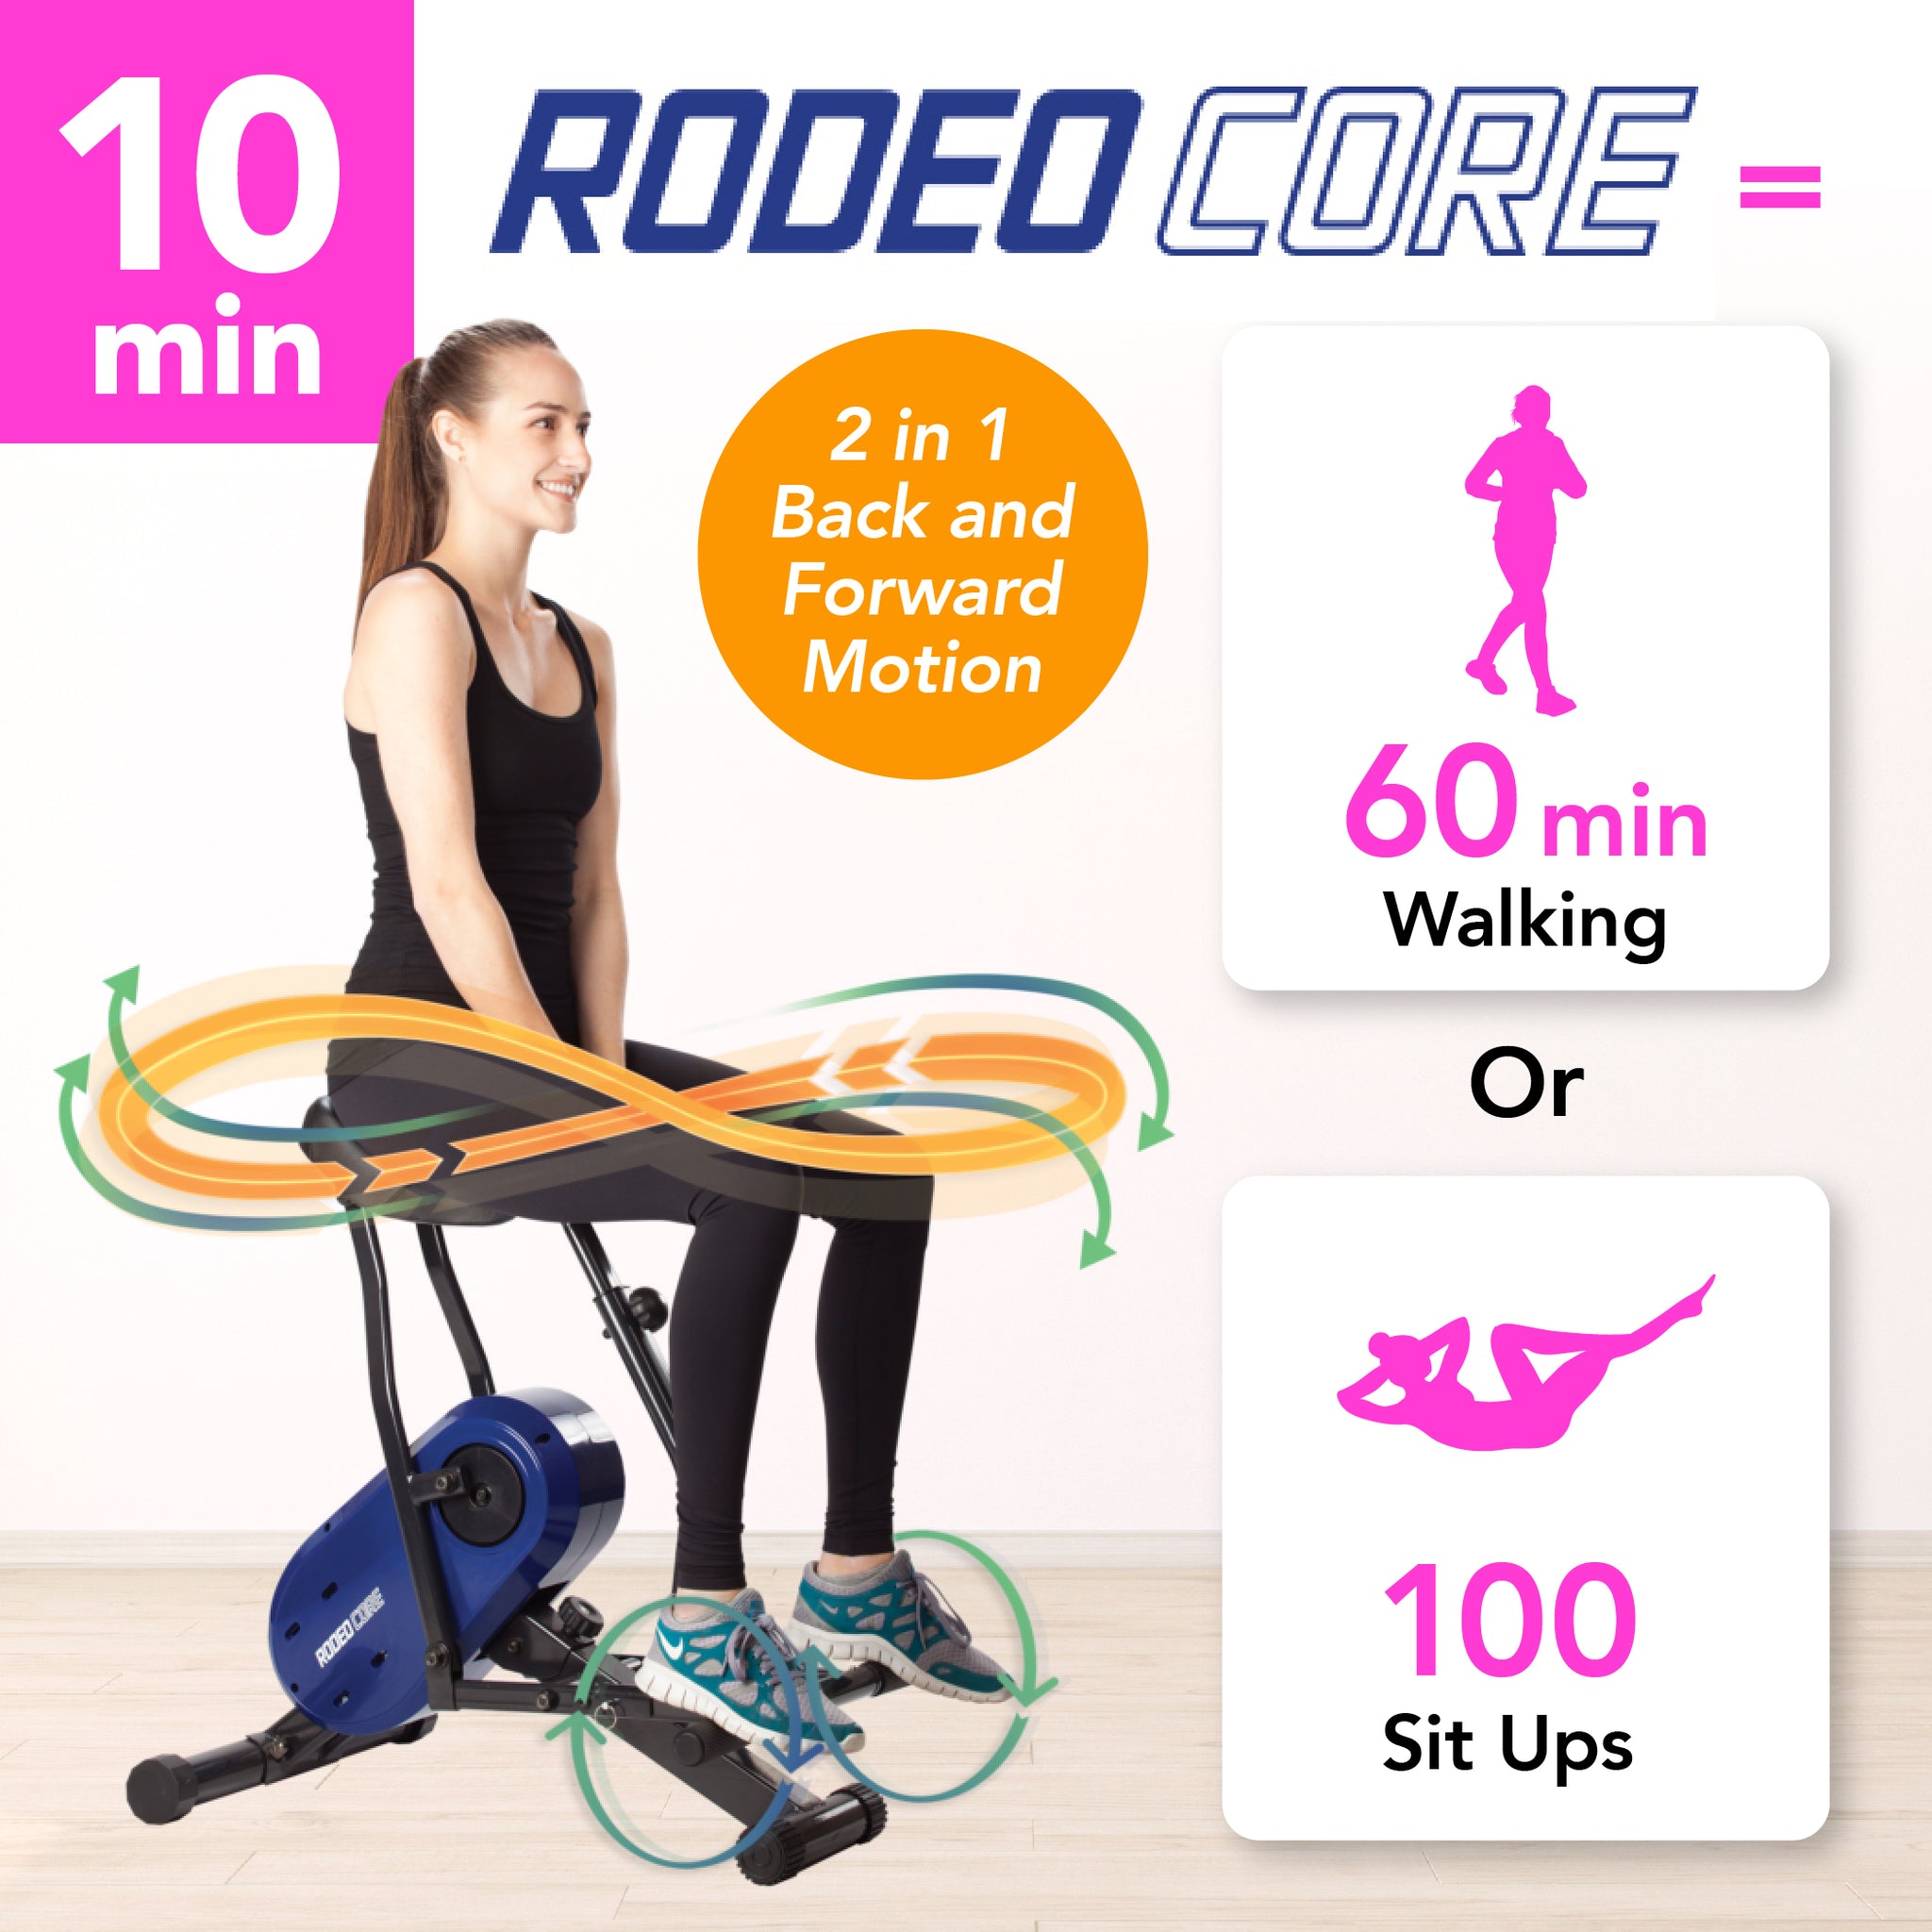 Rodeo Core Horse Exercise Machine